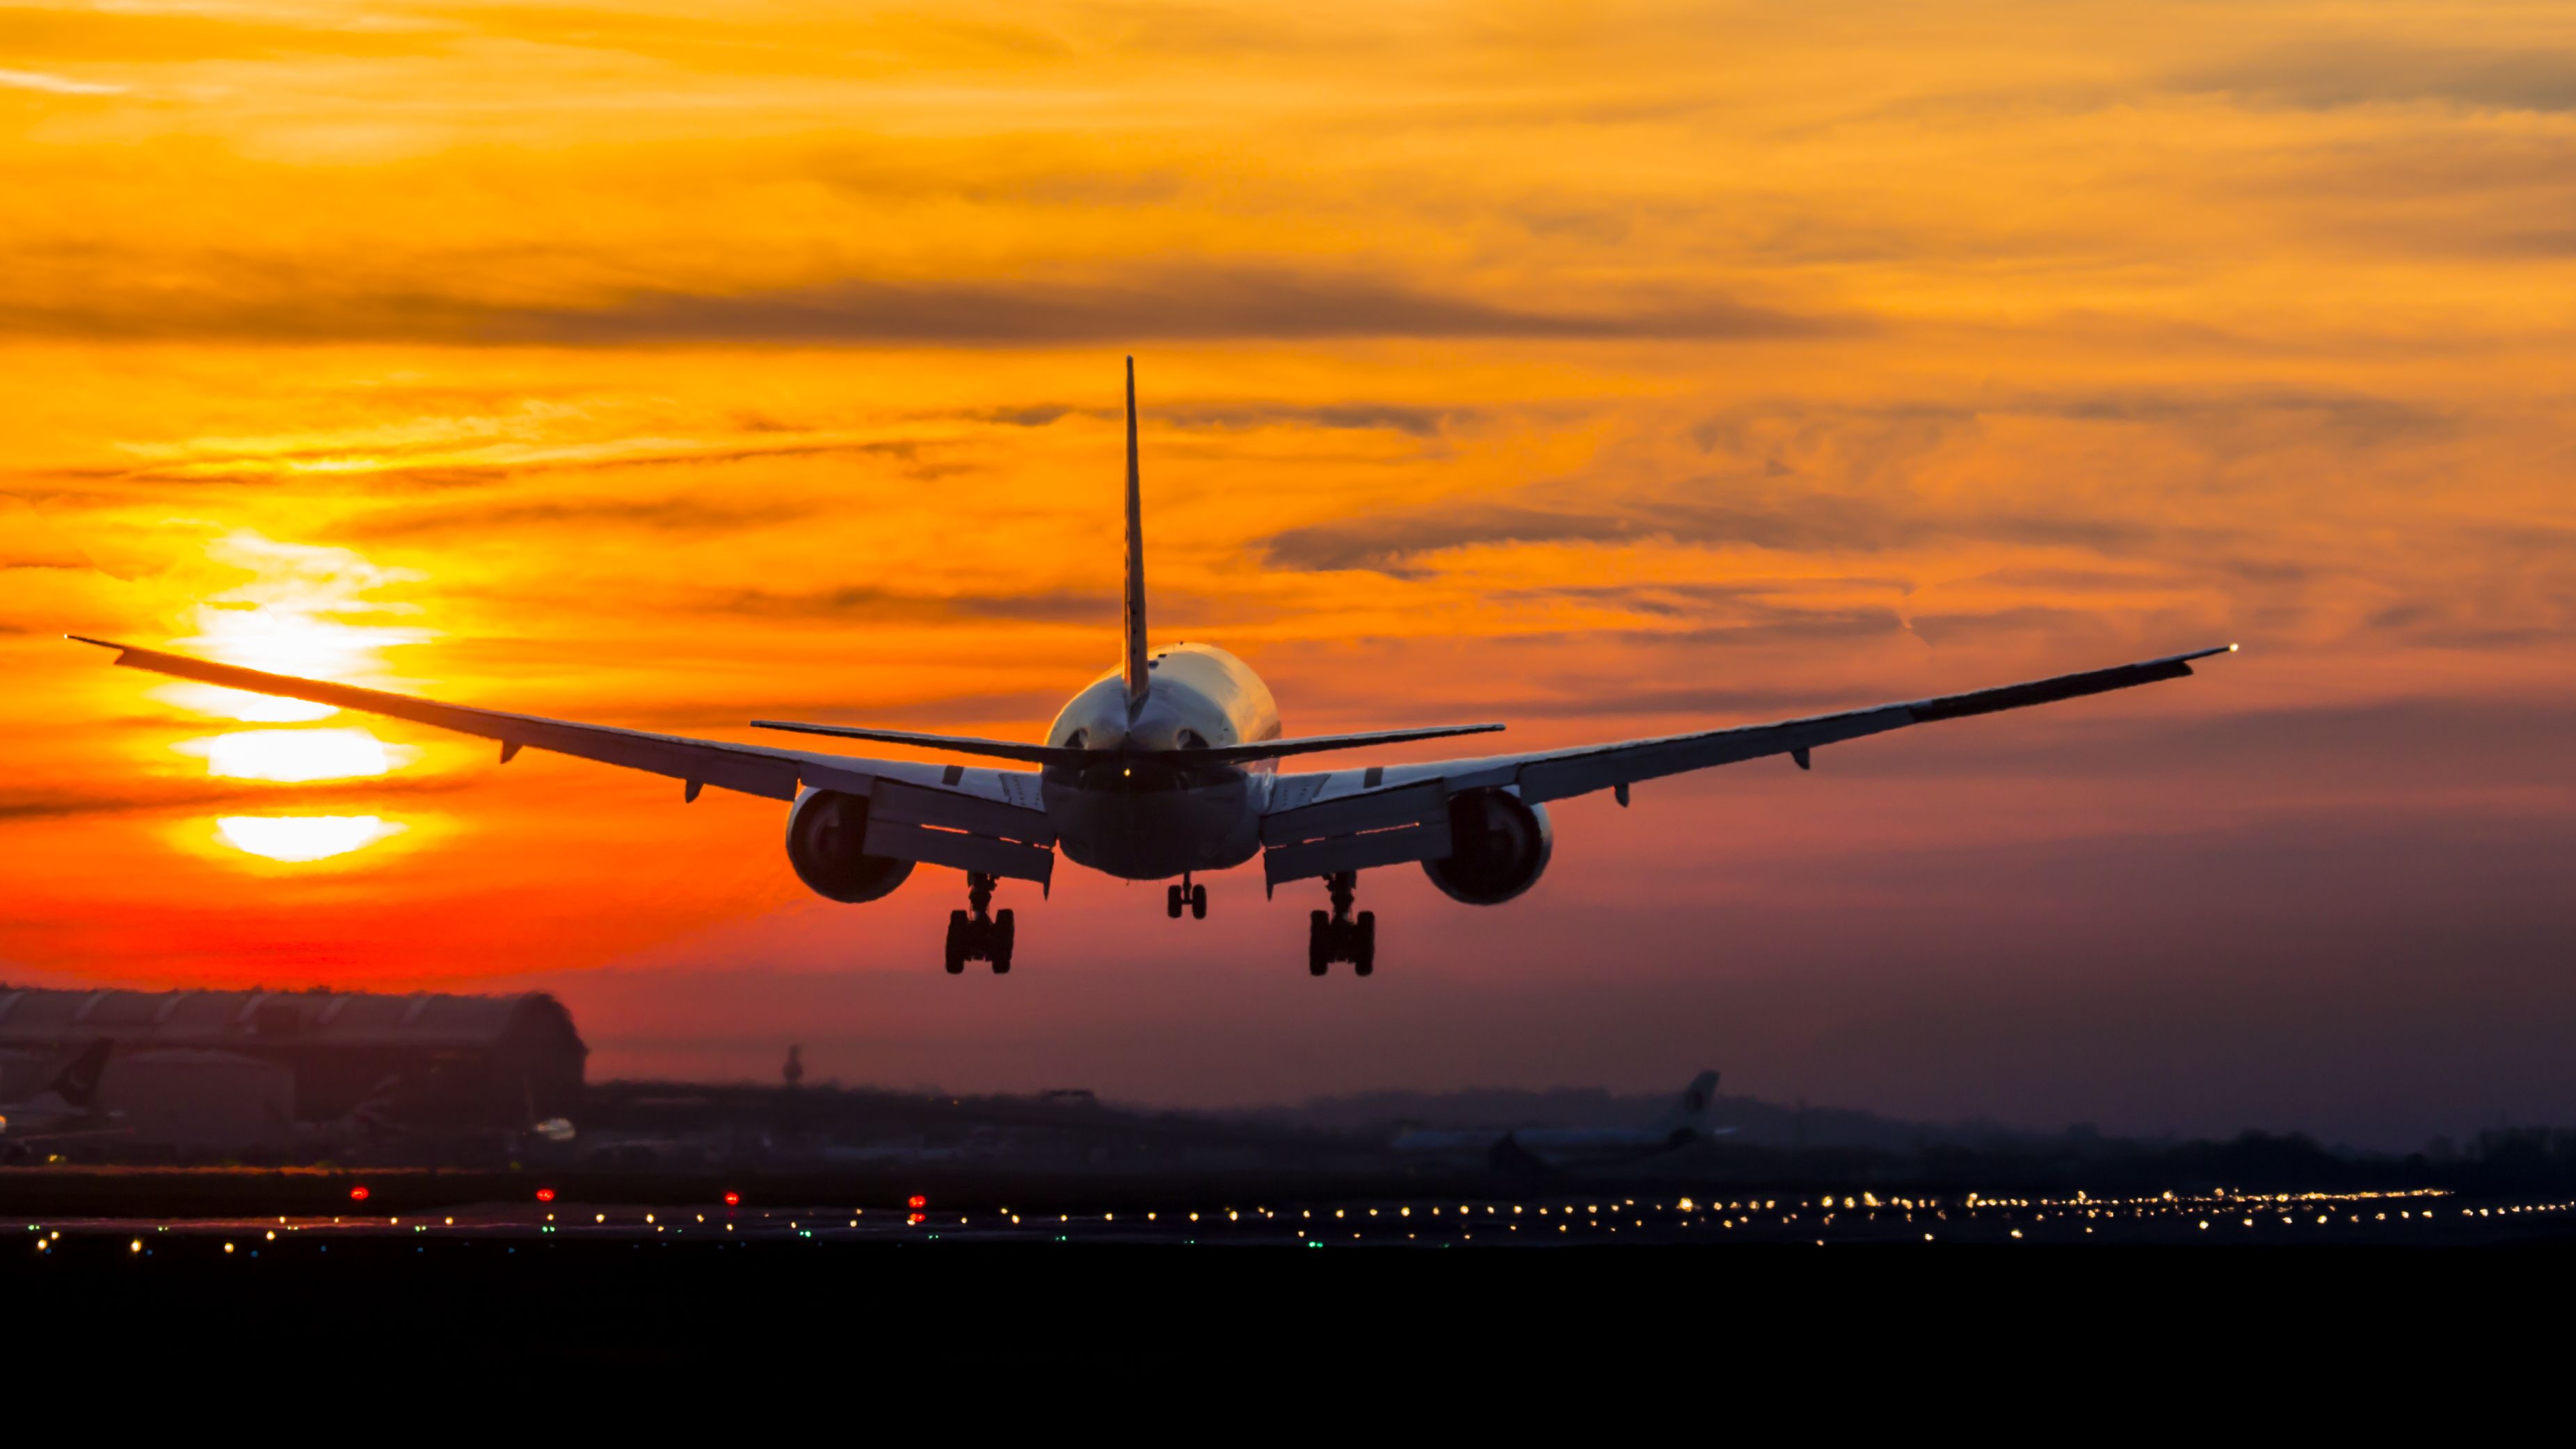 An aircraft landing at sunset.